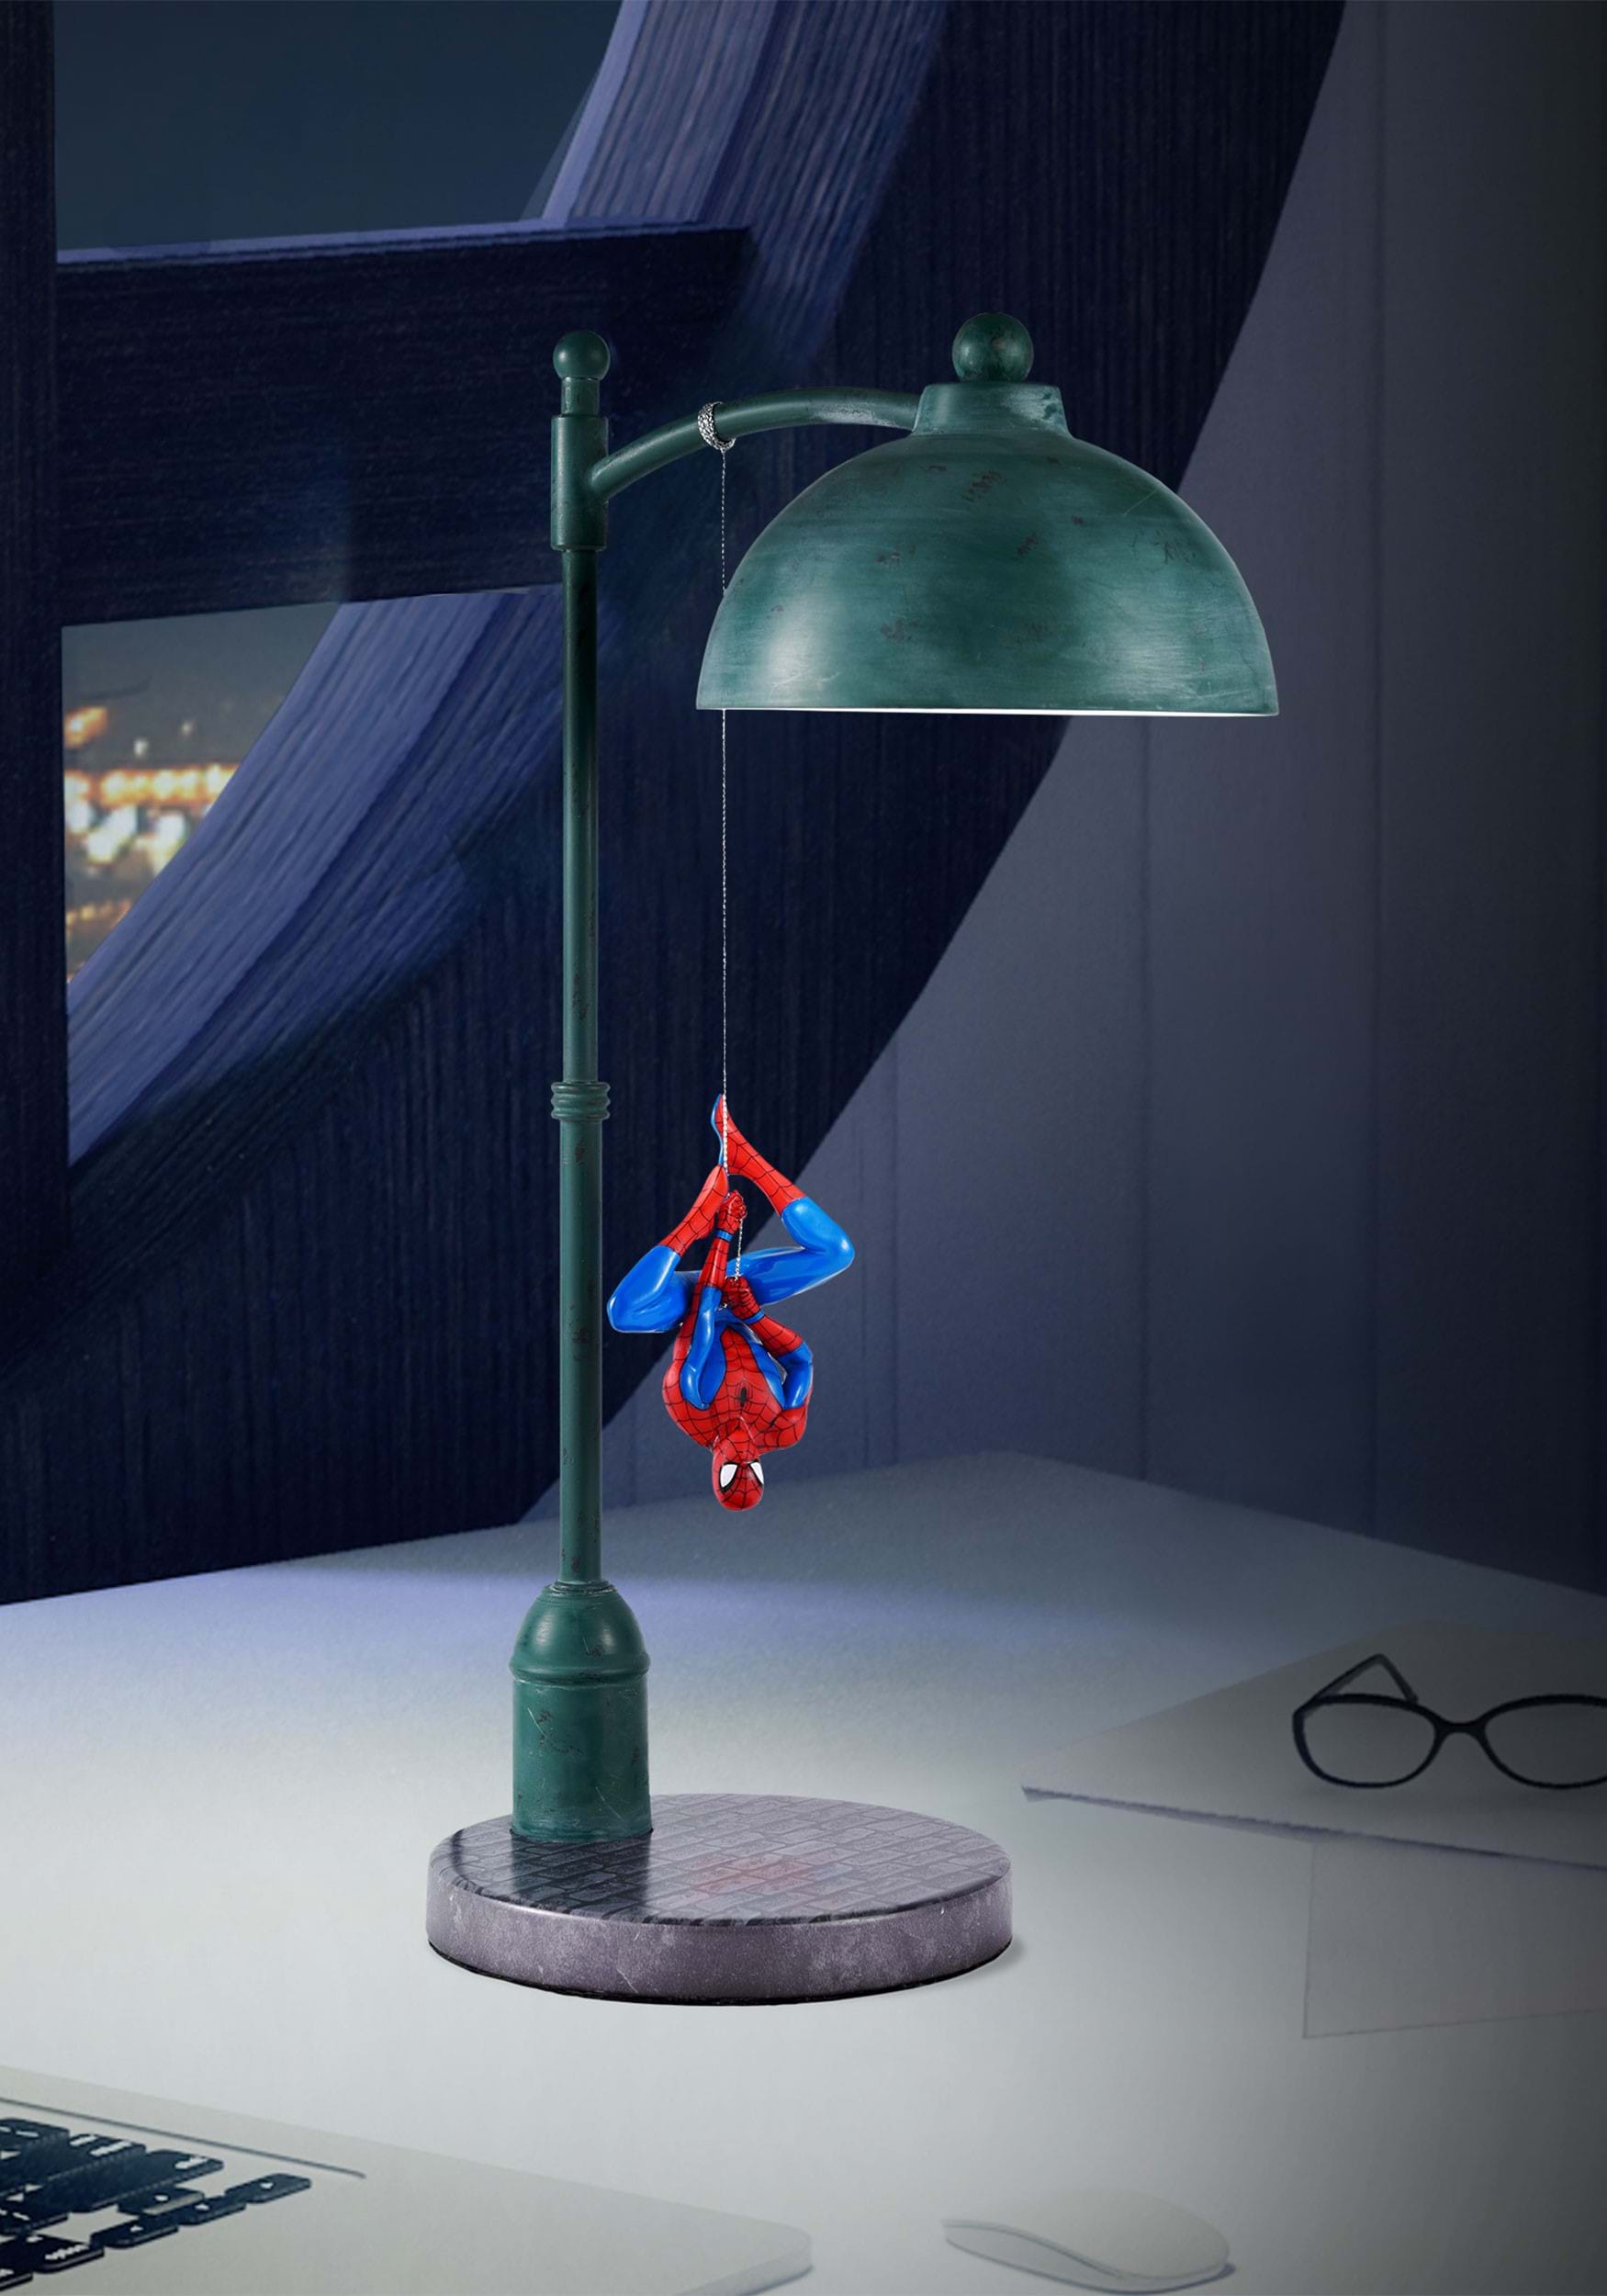 Spiderman Lampe de Table 